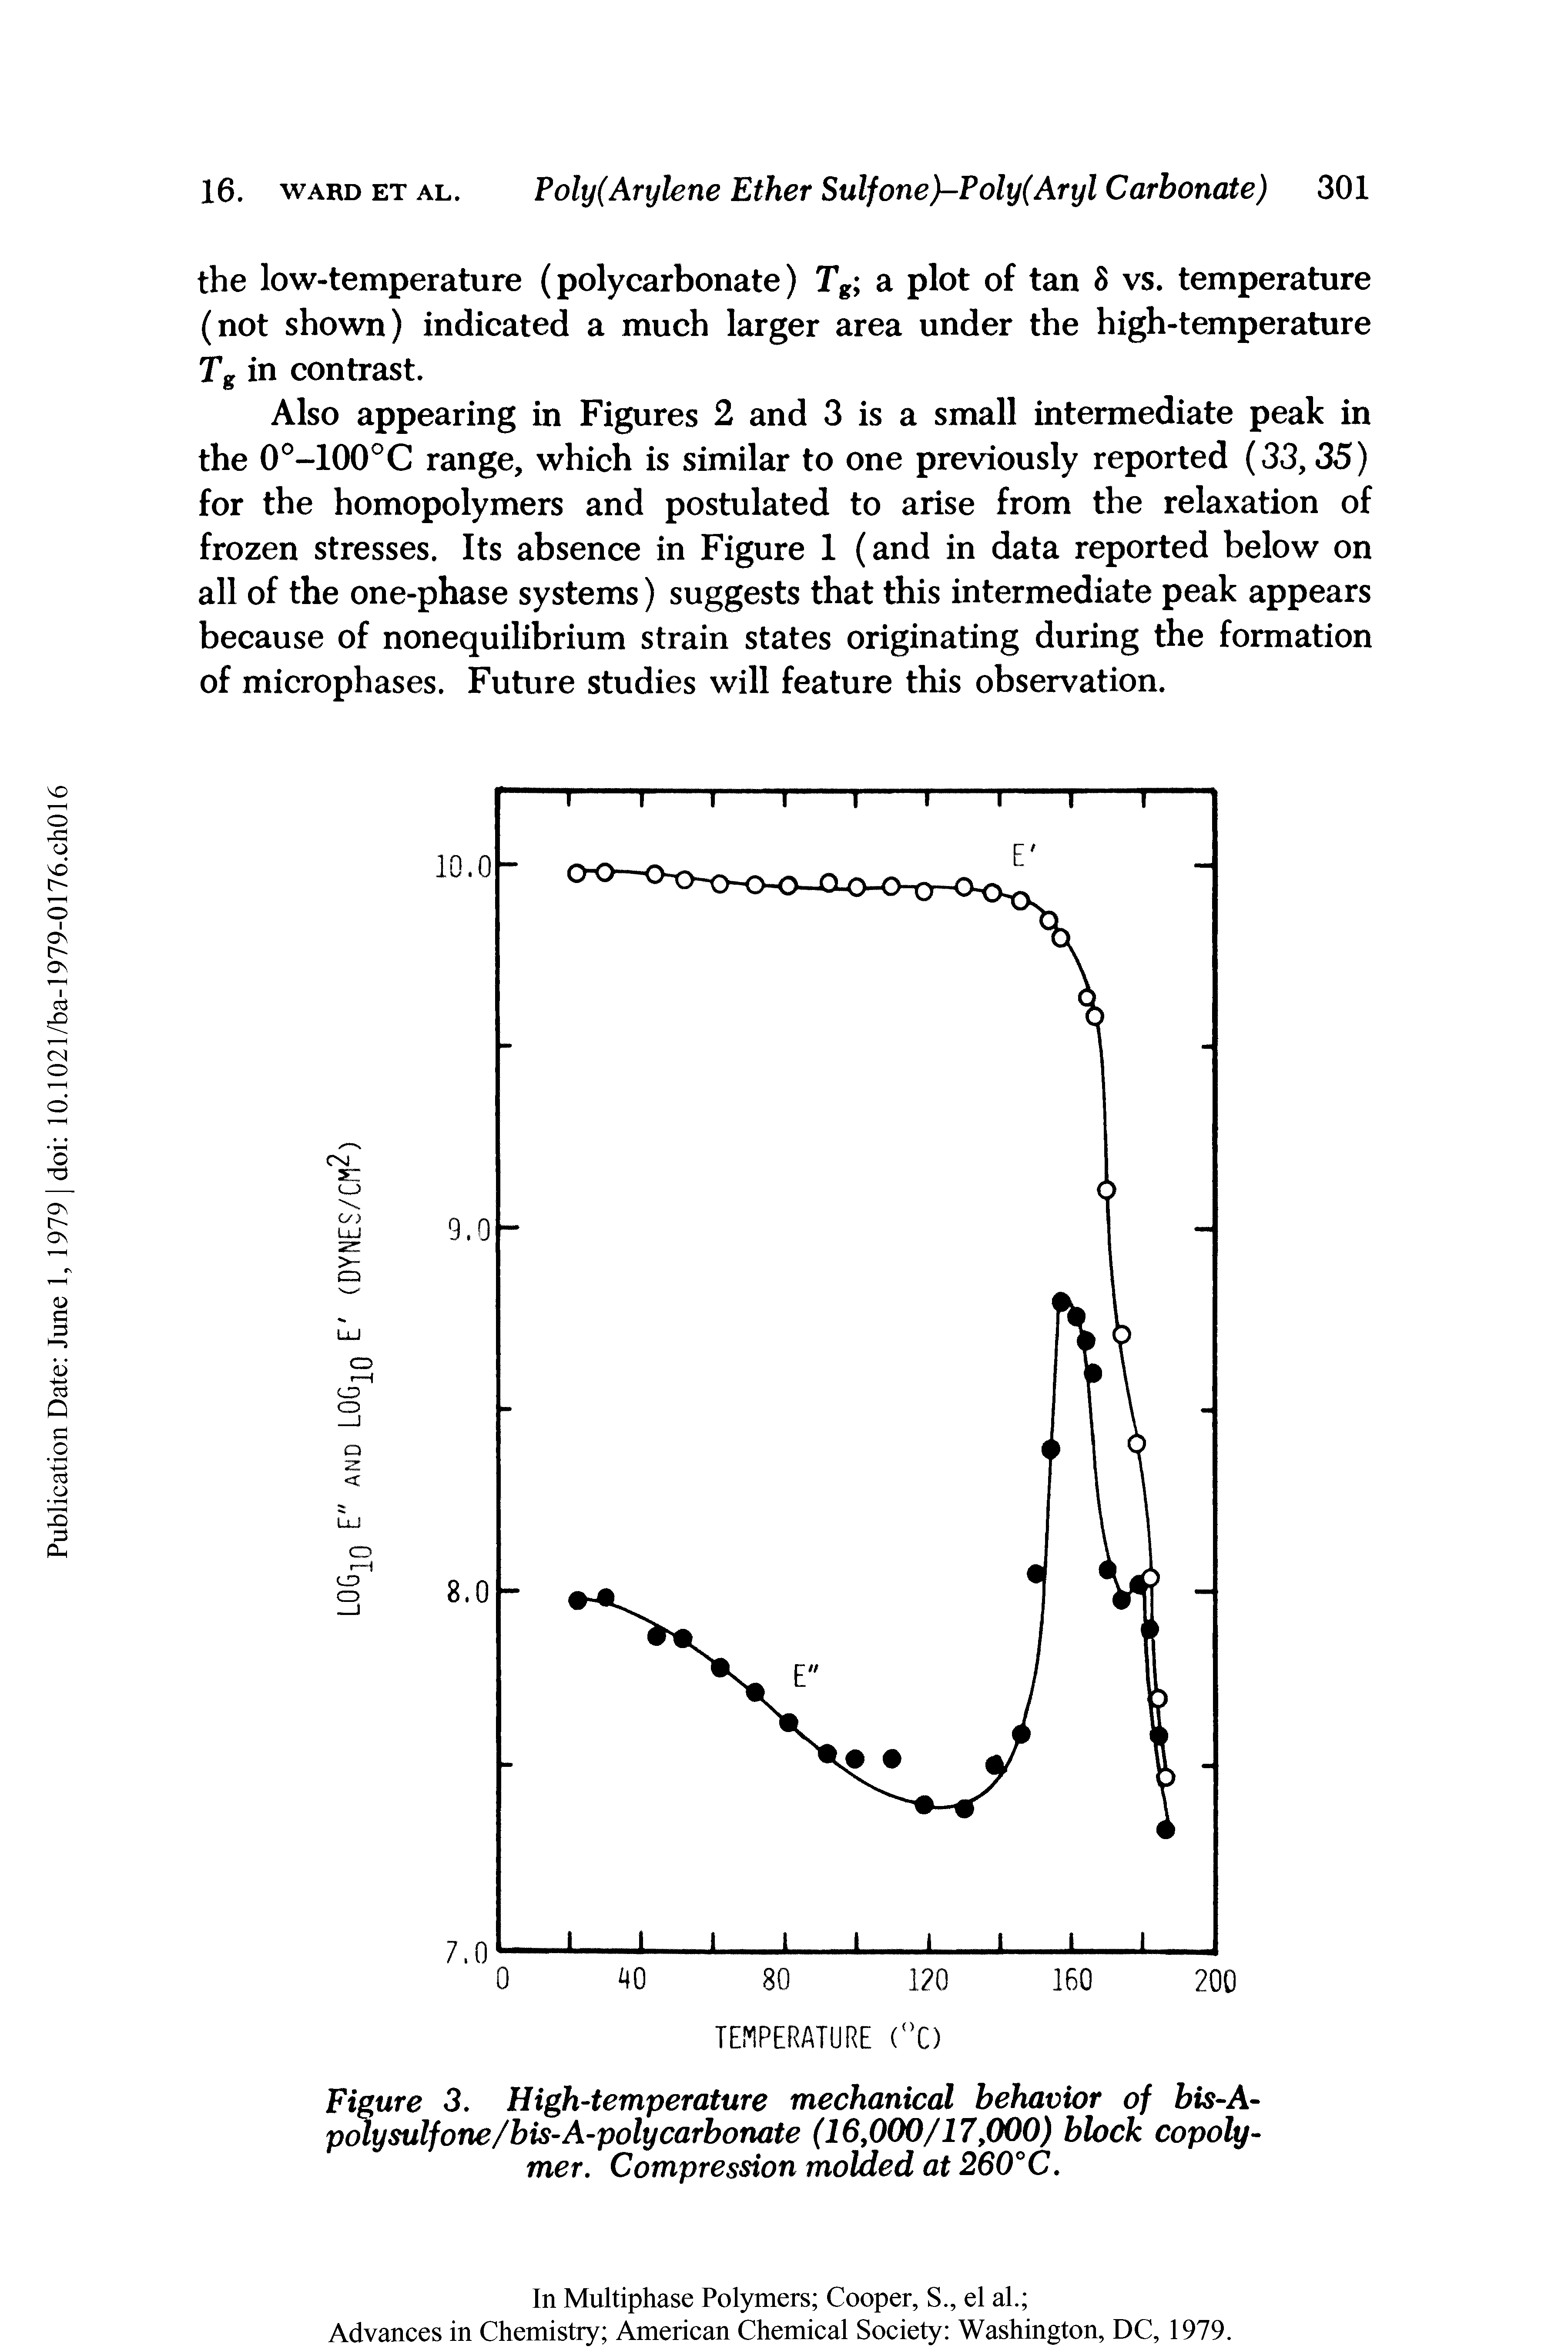 Figure 3. High-temperature mechanical behavior of bis-A-polysulfone/bis-A-polycarbonate (16,000/17,000) block copolymer. Compression molded at 260°C.